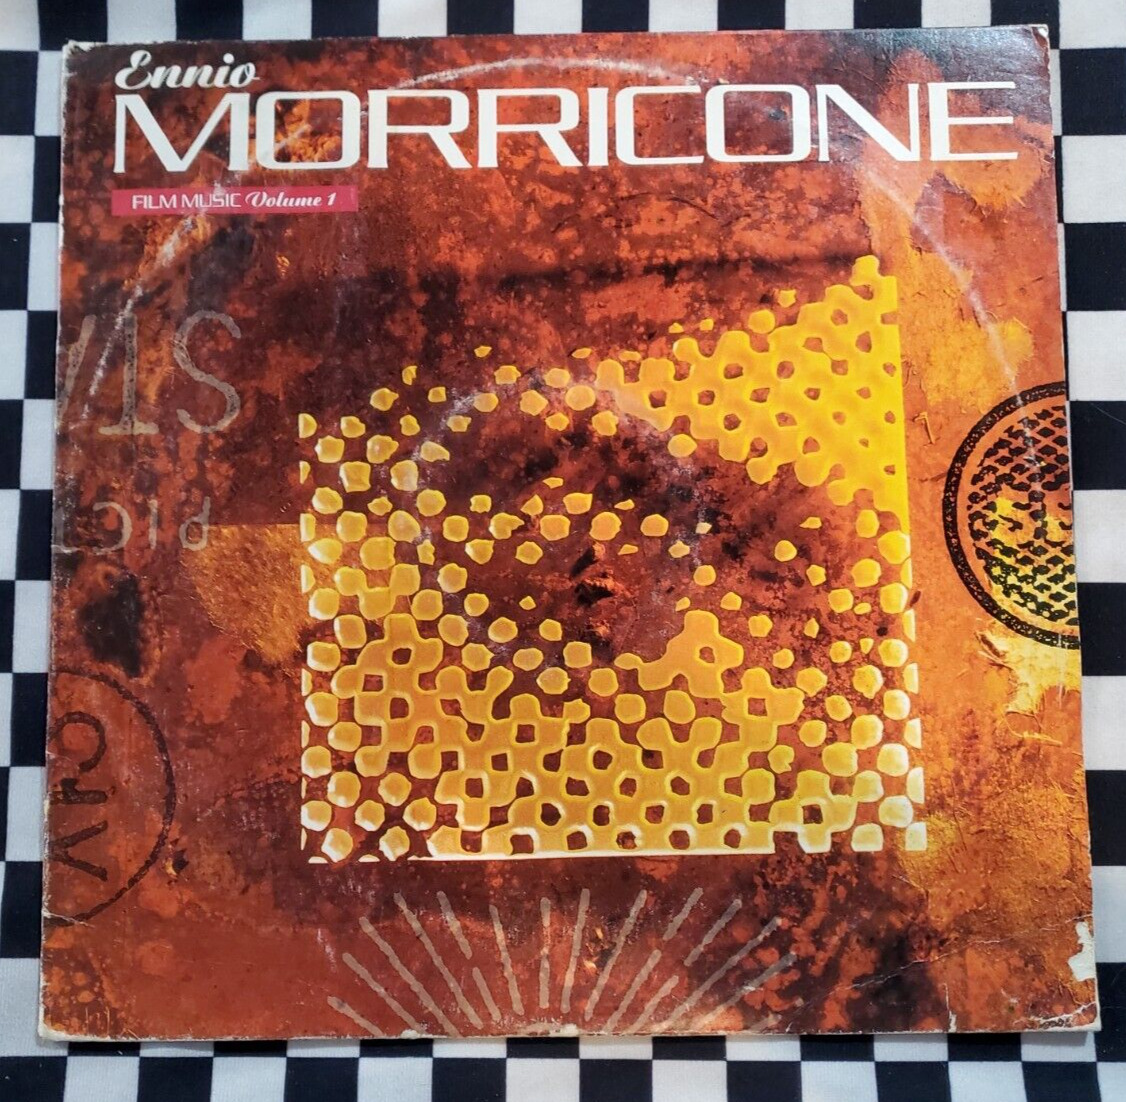 Film Music Volume 1 LP by Ennio Morricone vinyl 1987 VG+ 1-90674 Virgin